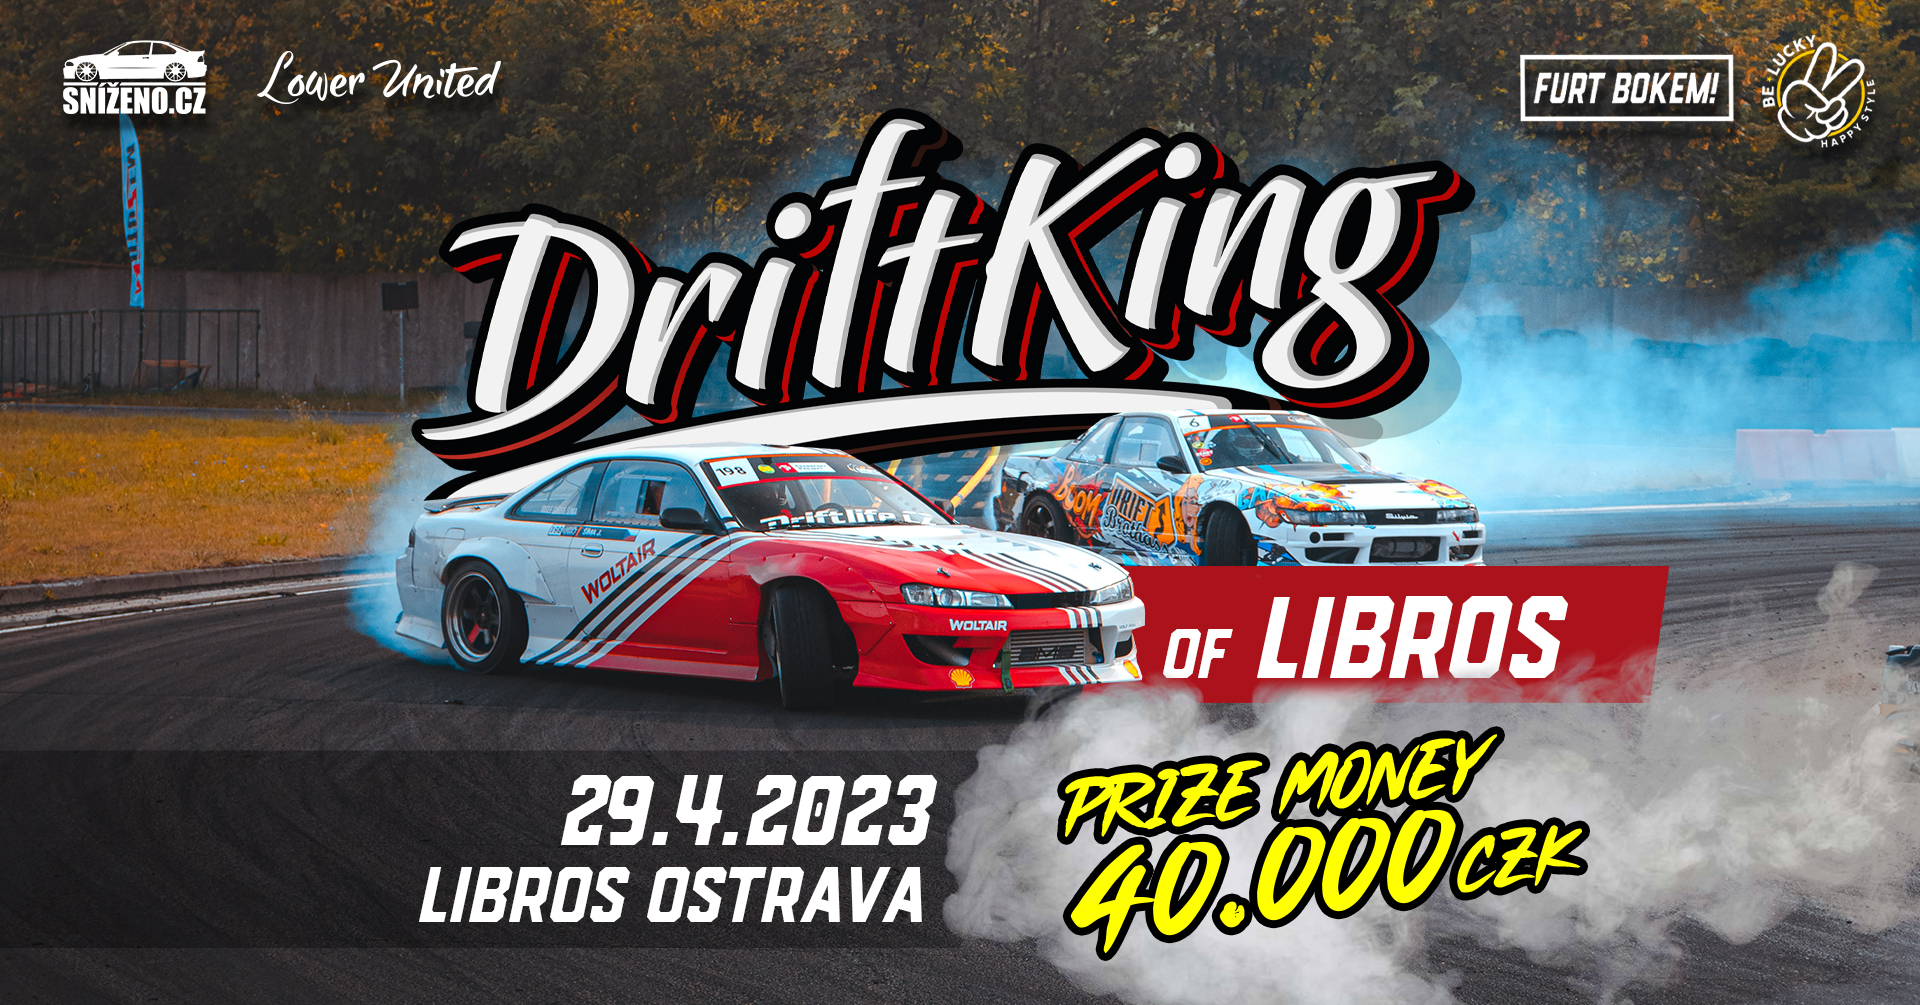 Drift King of Libros Ostrava 2023